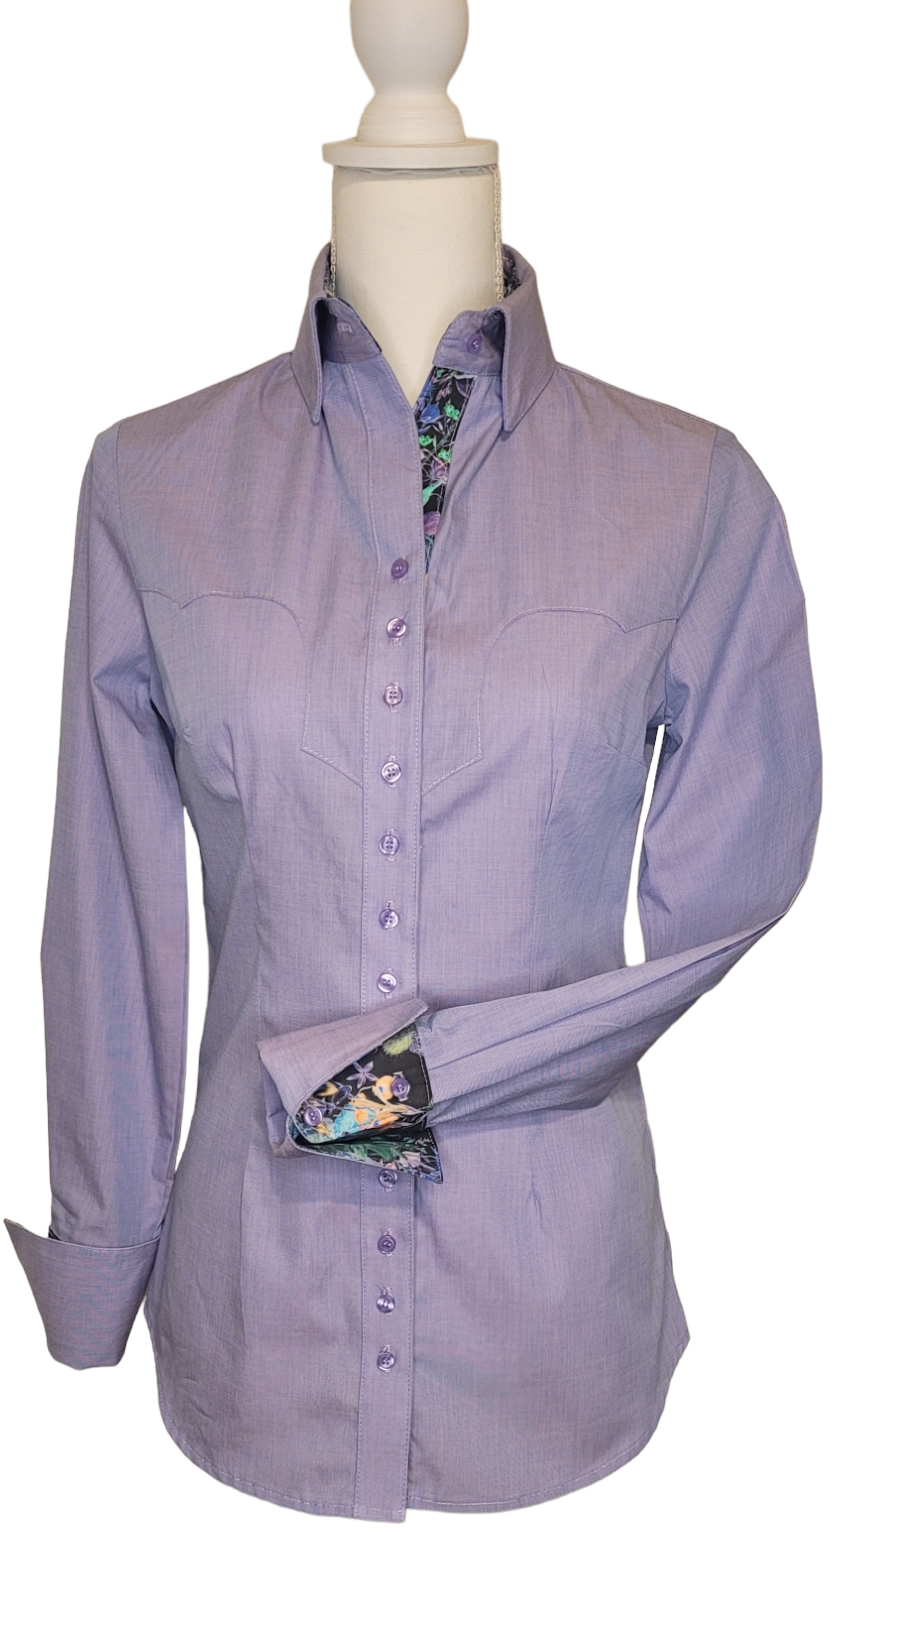 Women's Long Sleeve Button Down Shirt - Lavender / Nightshade